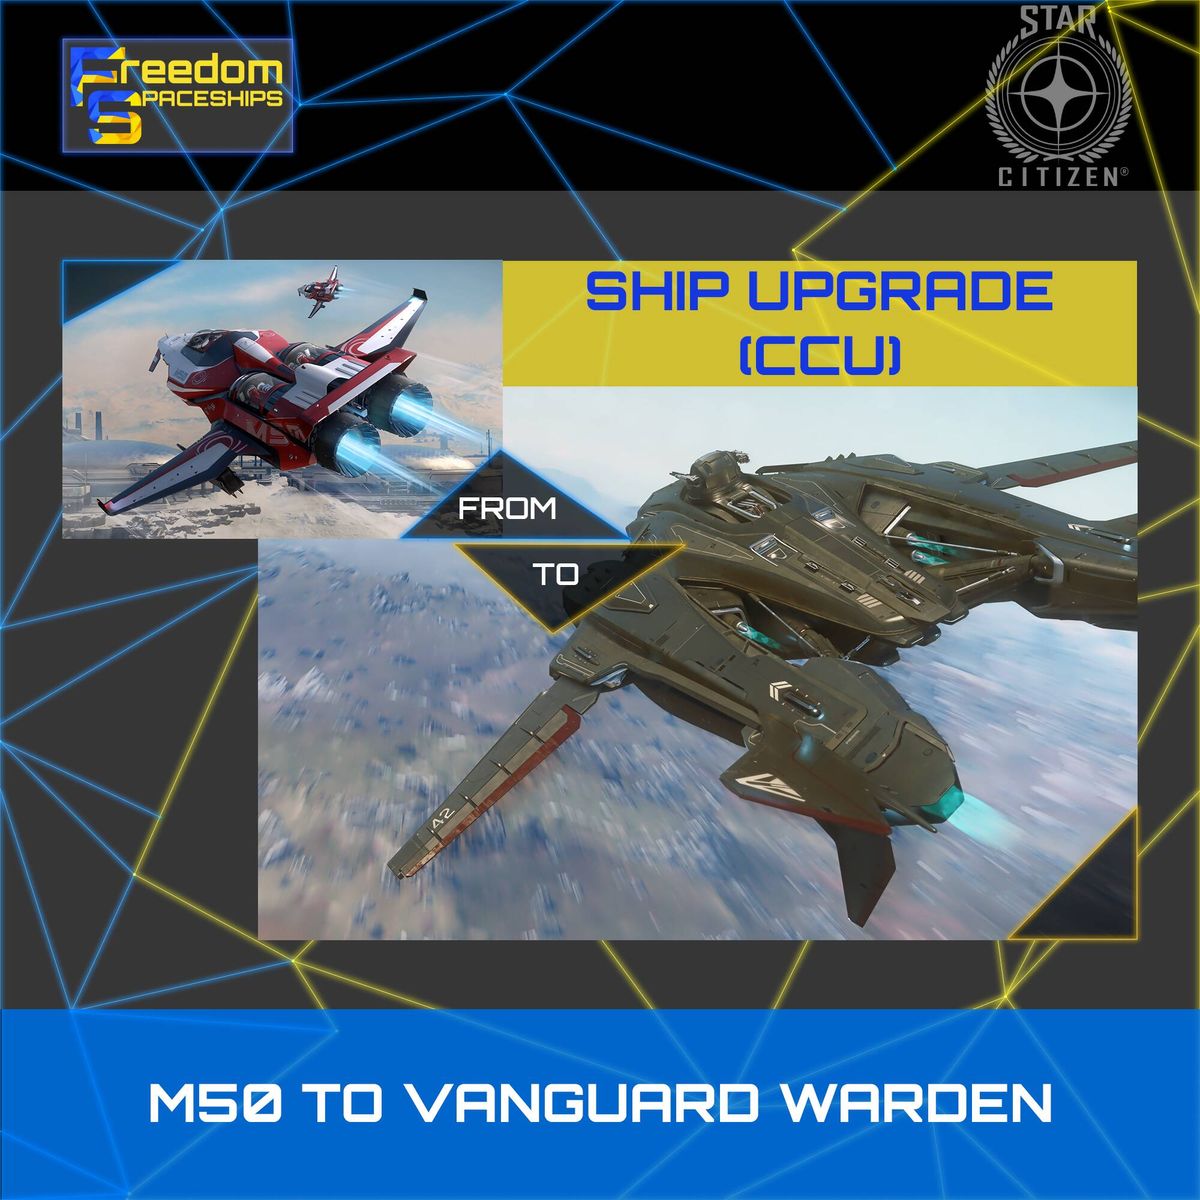 Upgrade - M50 to Vanguard Warden